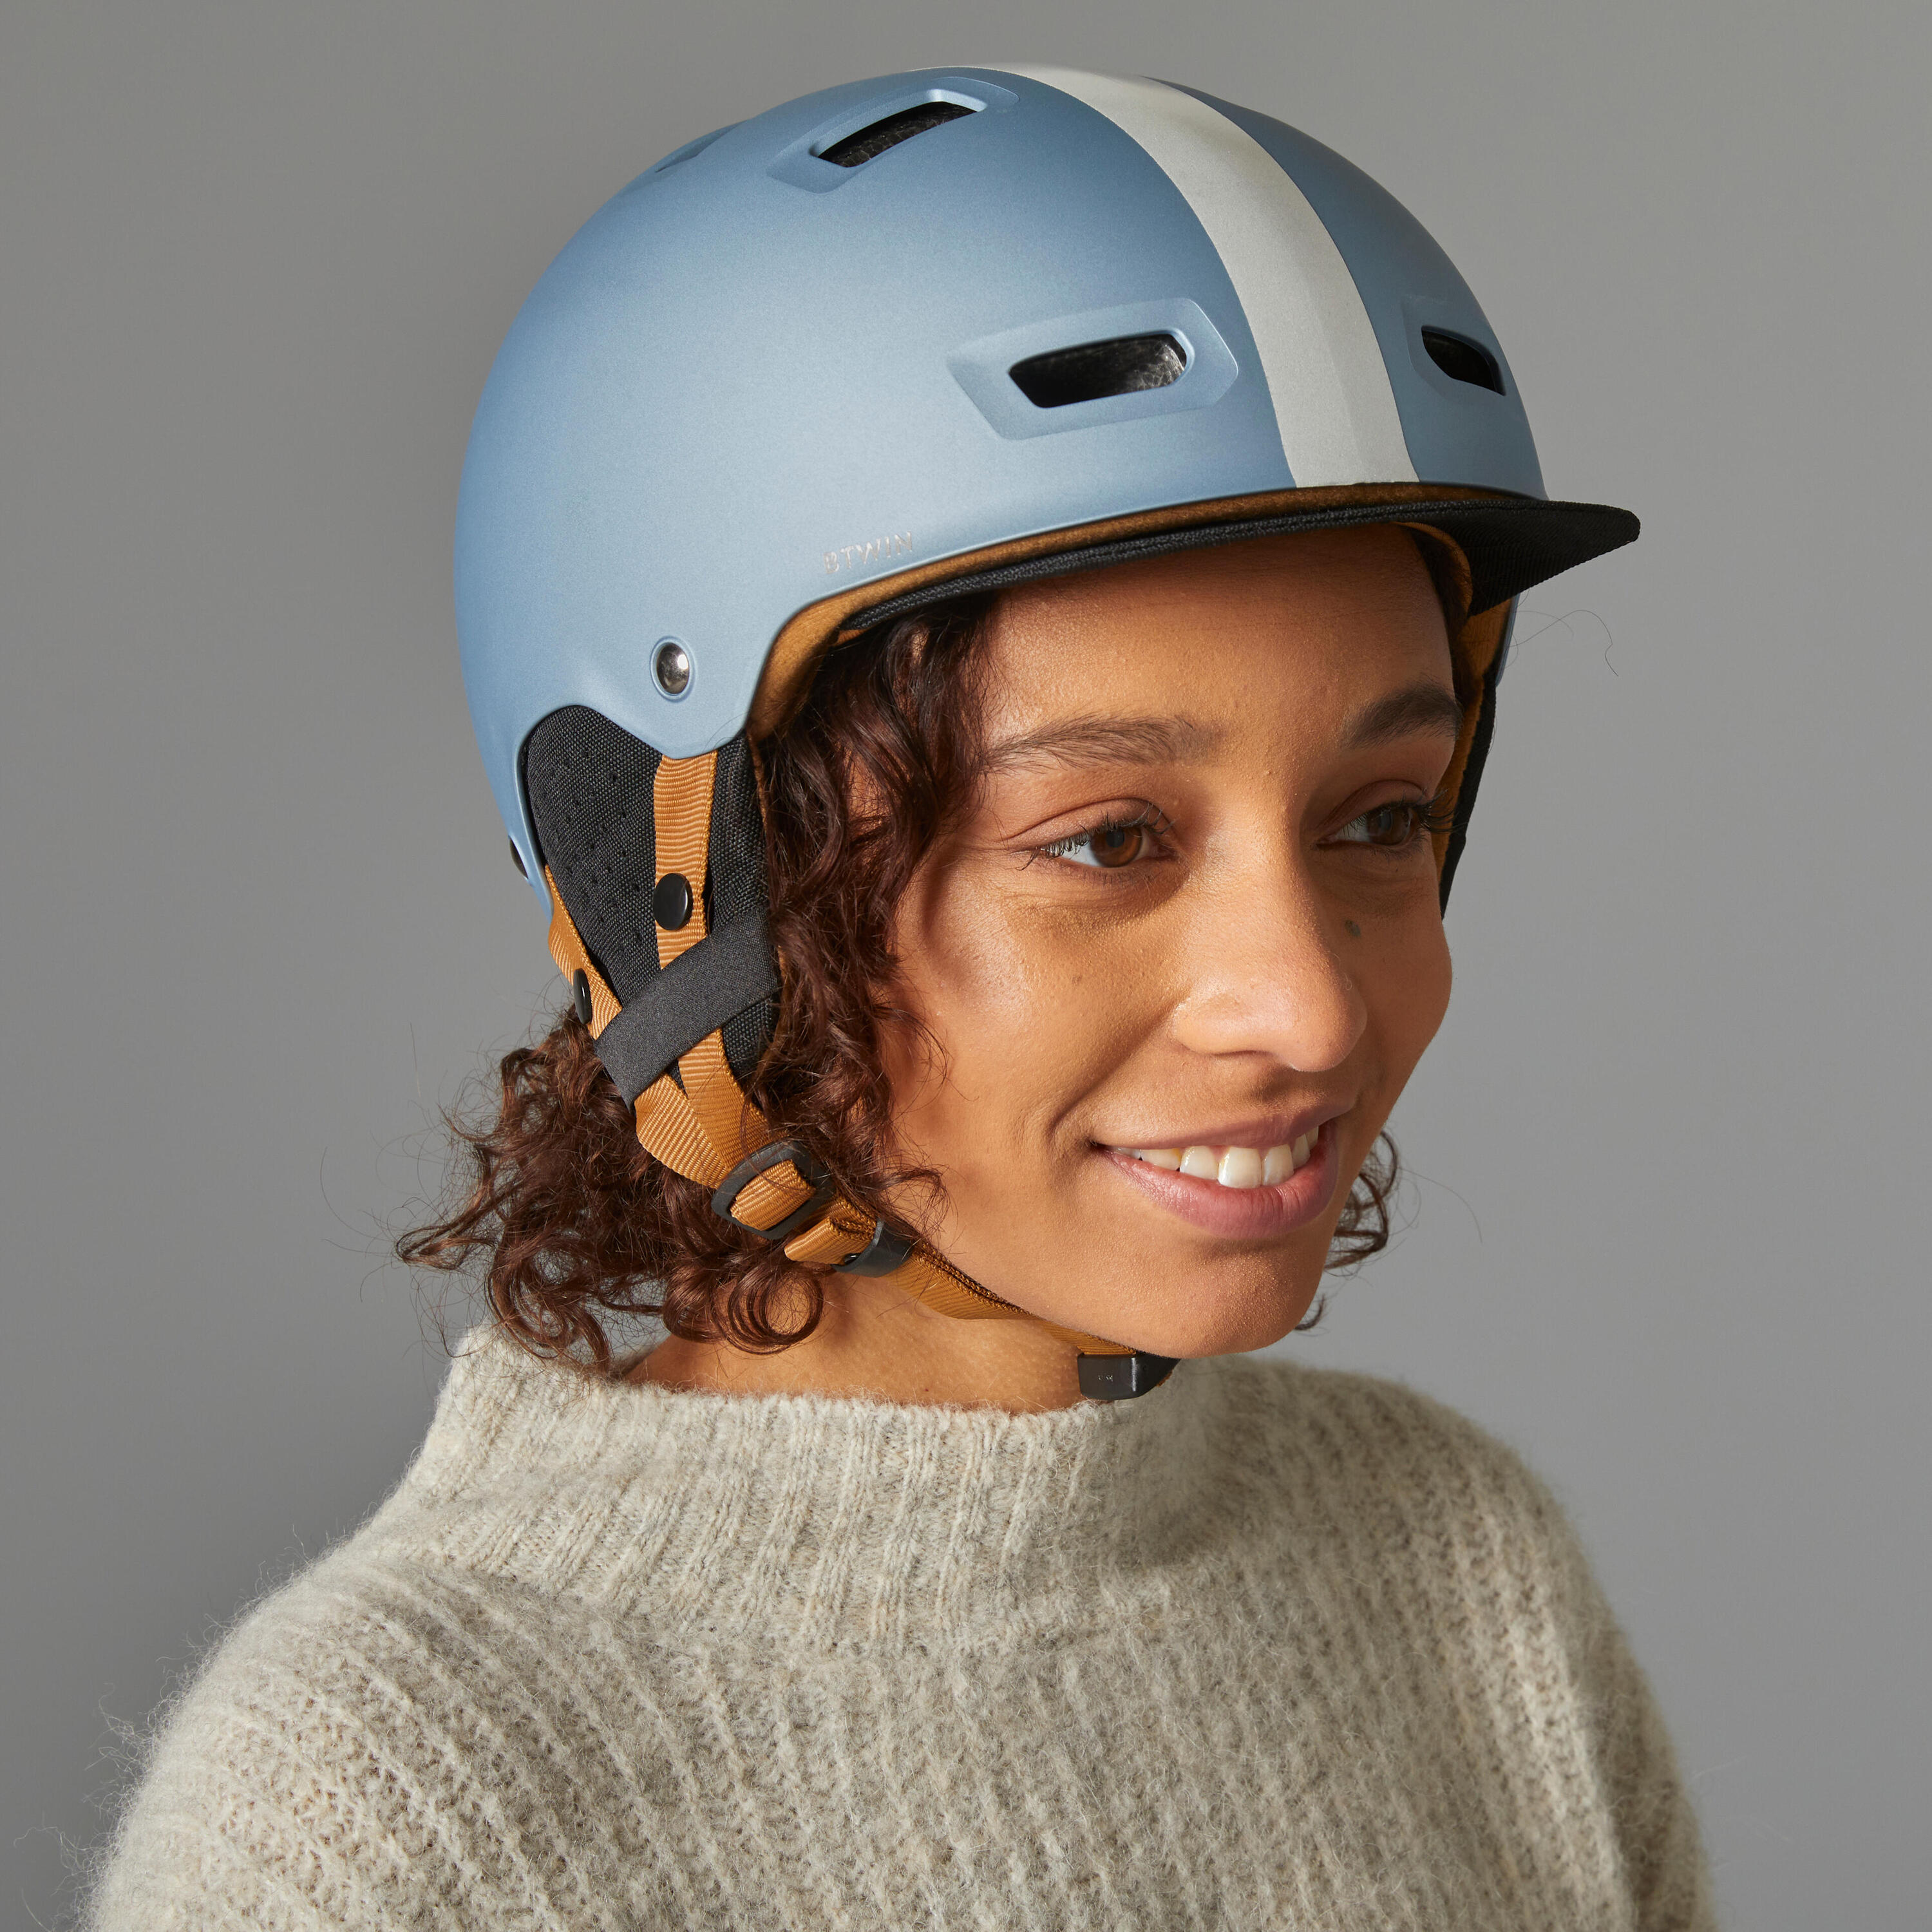 City Cycling Bowl Helmet 540 - Blue/Reflective 8/11